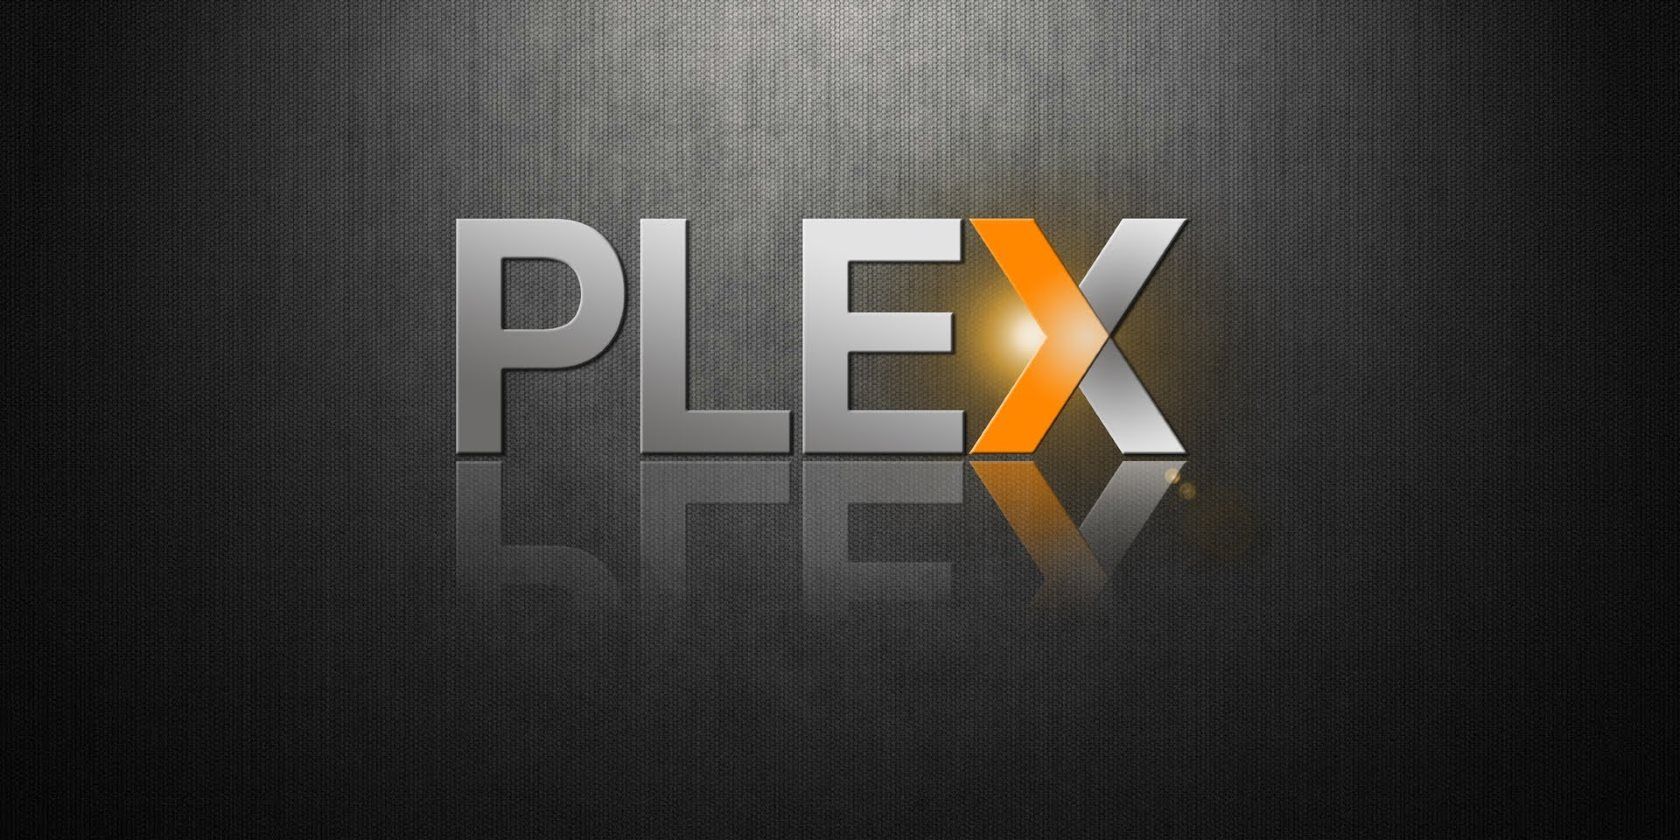 plex server